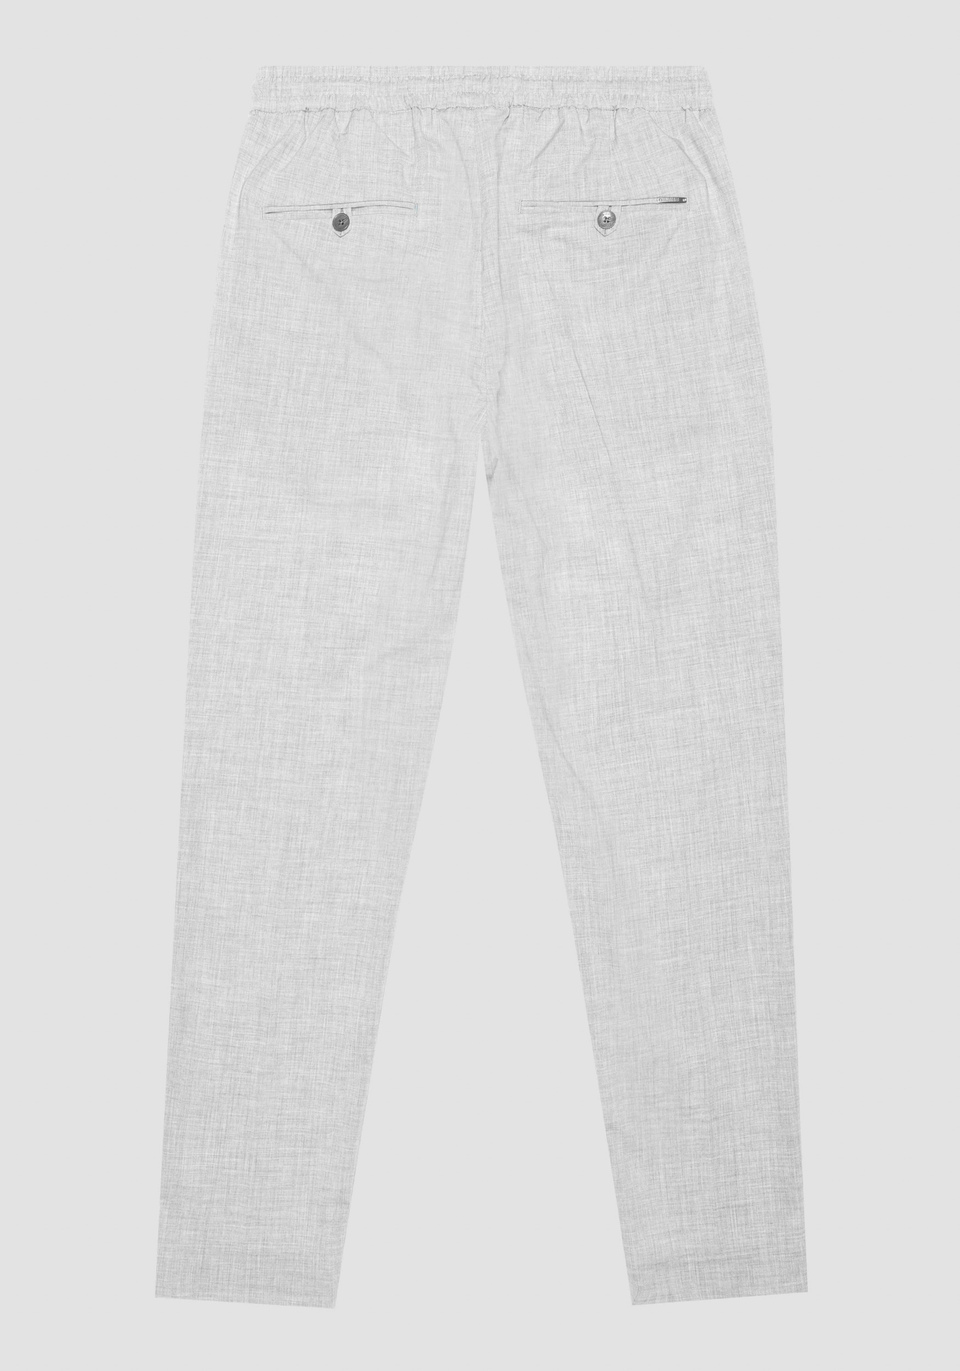 REGULAR FIT "NEIL" VISCOSE BLEND STRETCH FABRIC PANTS WITH DRAWSTRING - Antony Morato Online Shop